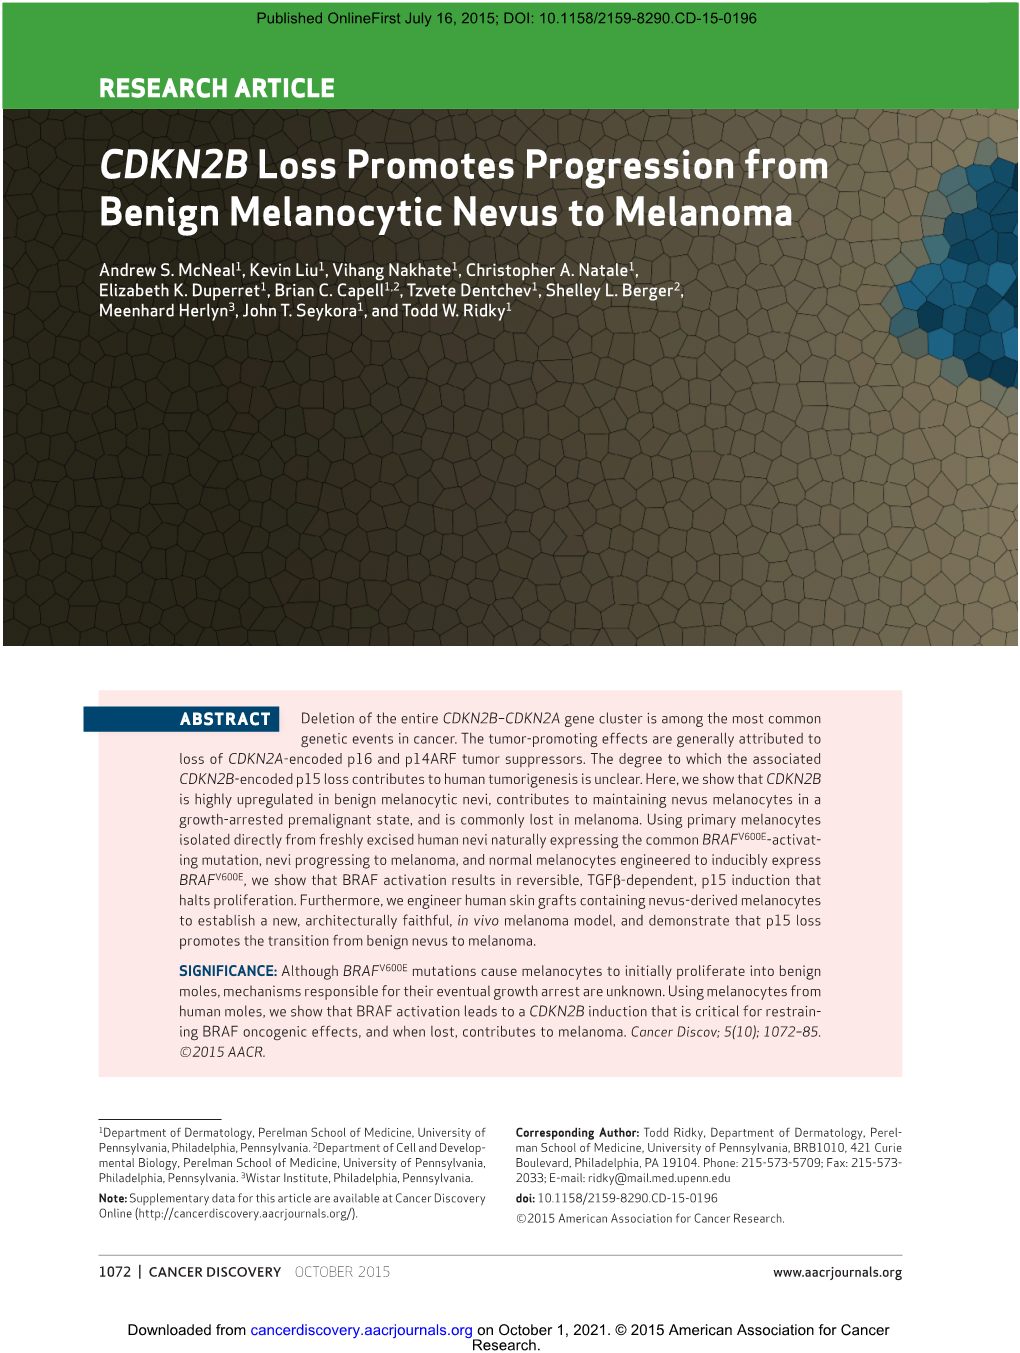 CDKN2B Loss Promotes Progression from Benign Melanocytic Nevus to Melanoma